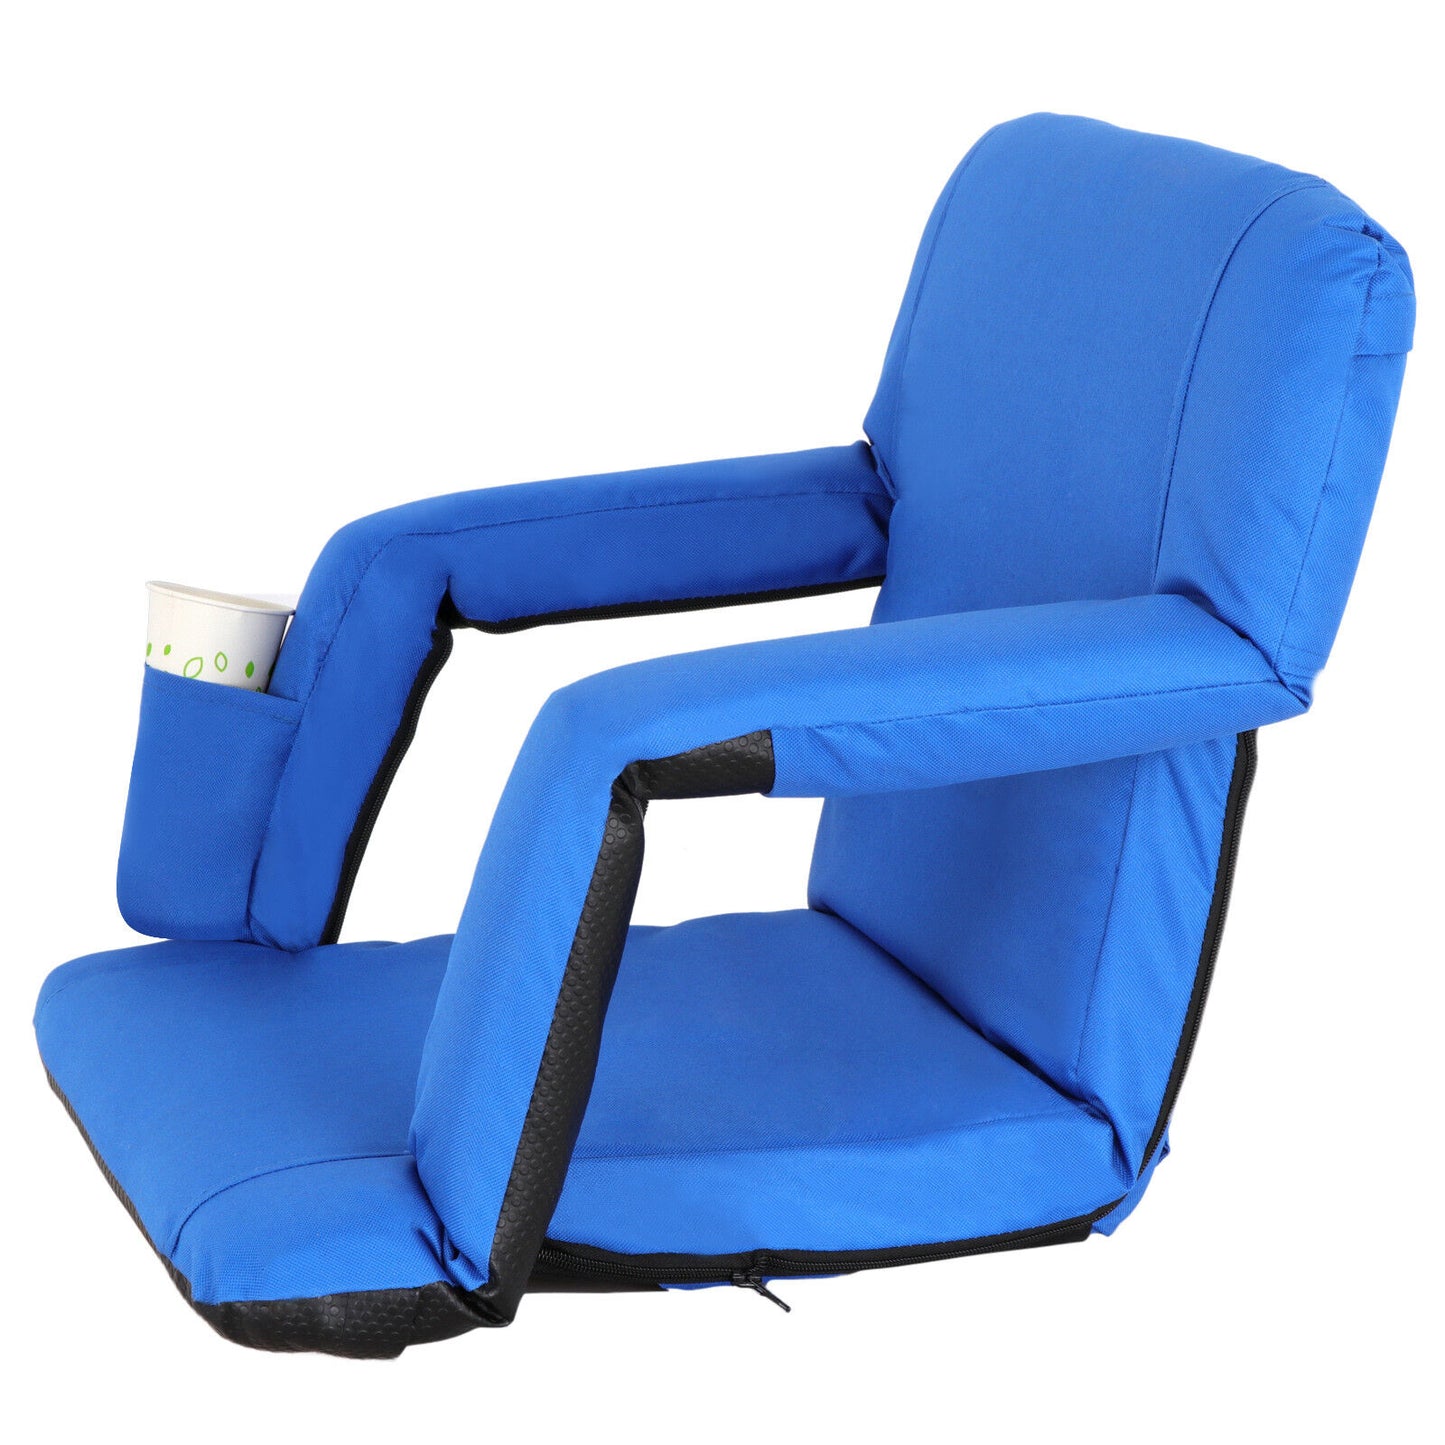 Blue Stadium Seats Chairs for Bleachers Waterproof  - 5 Reclining Positions